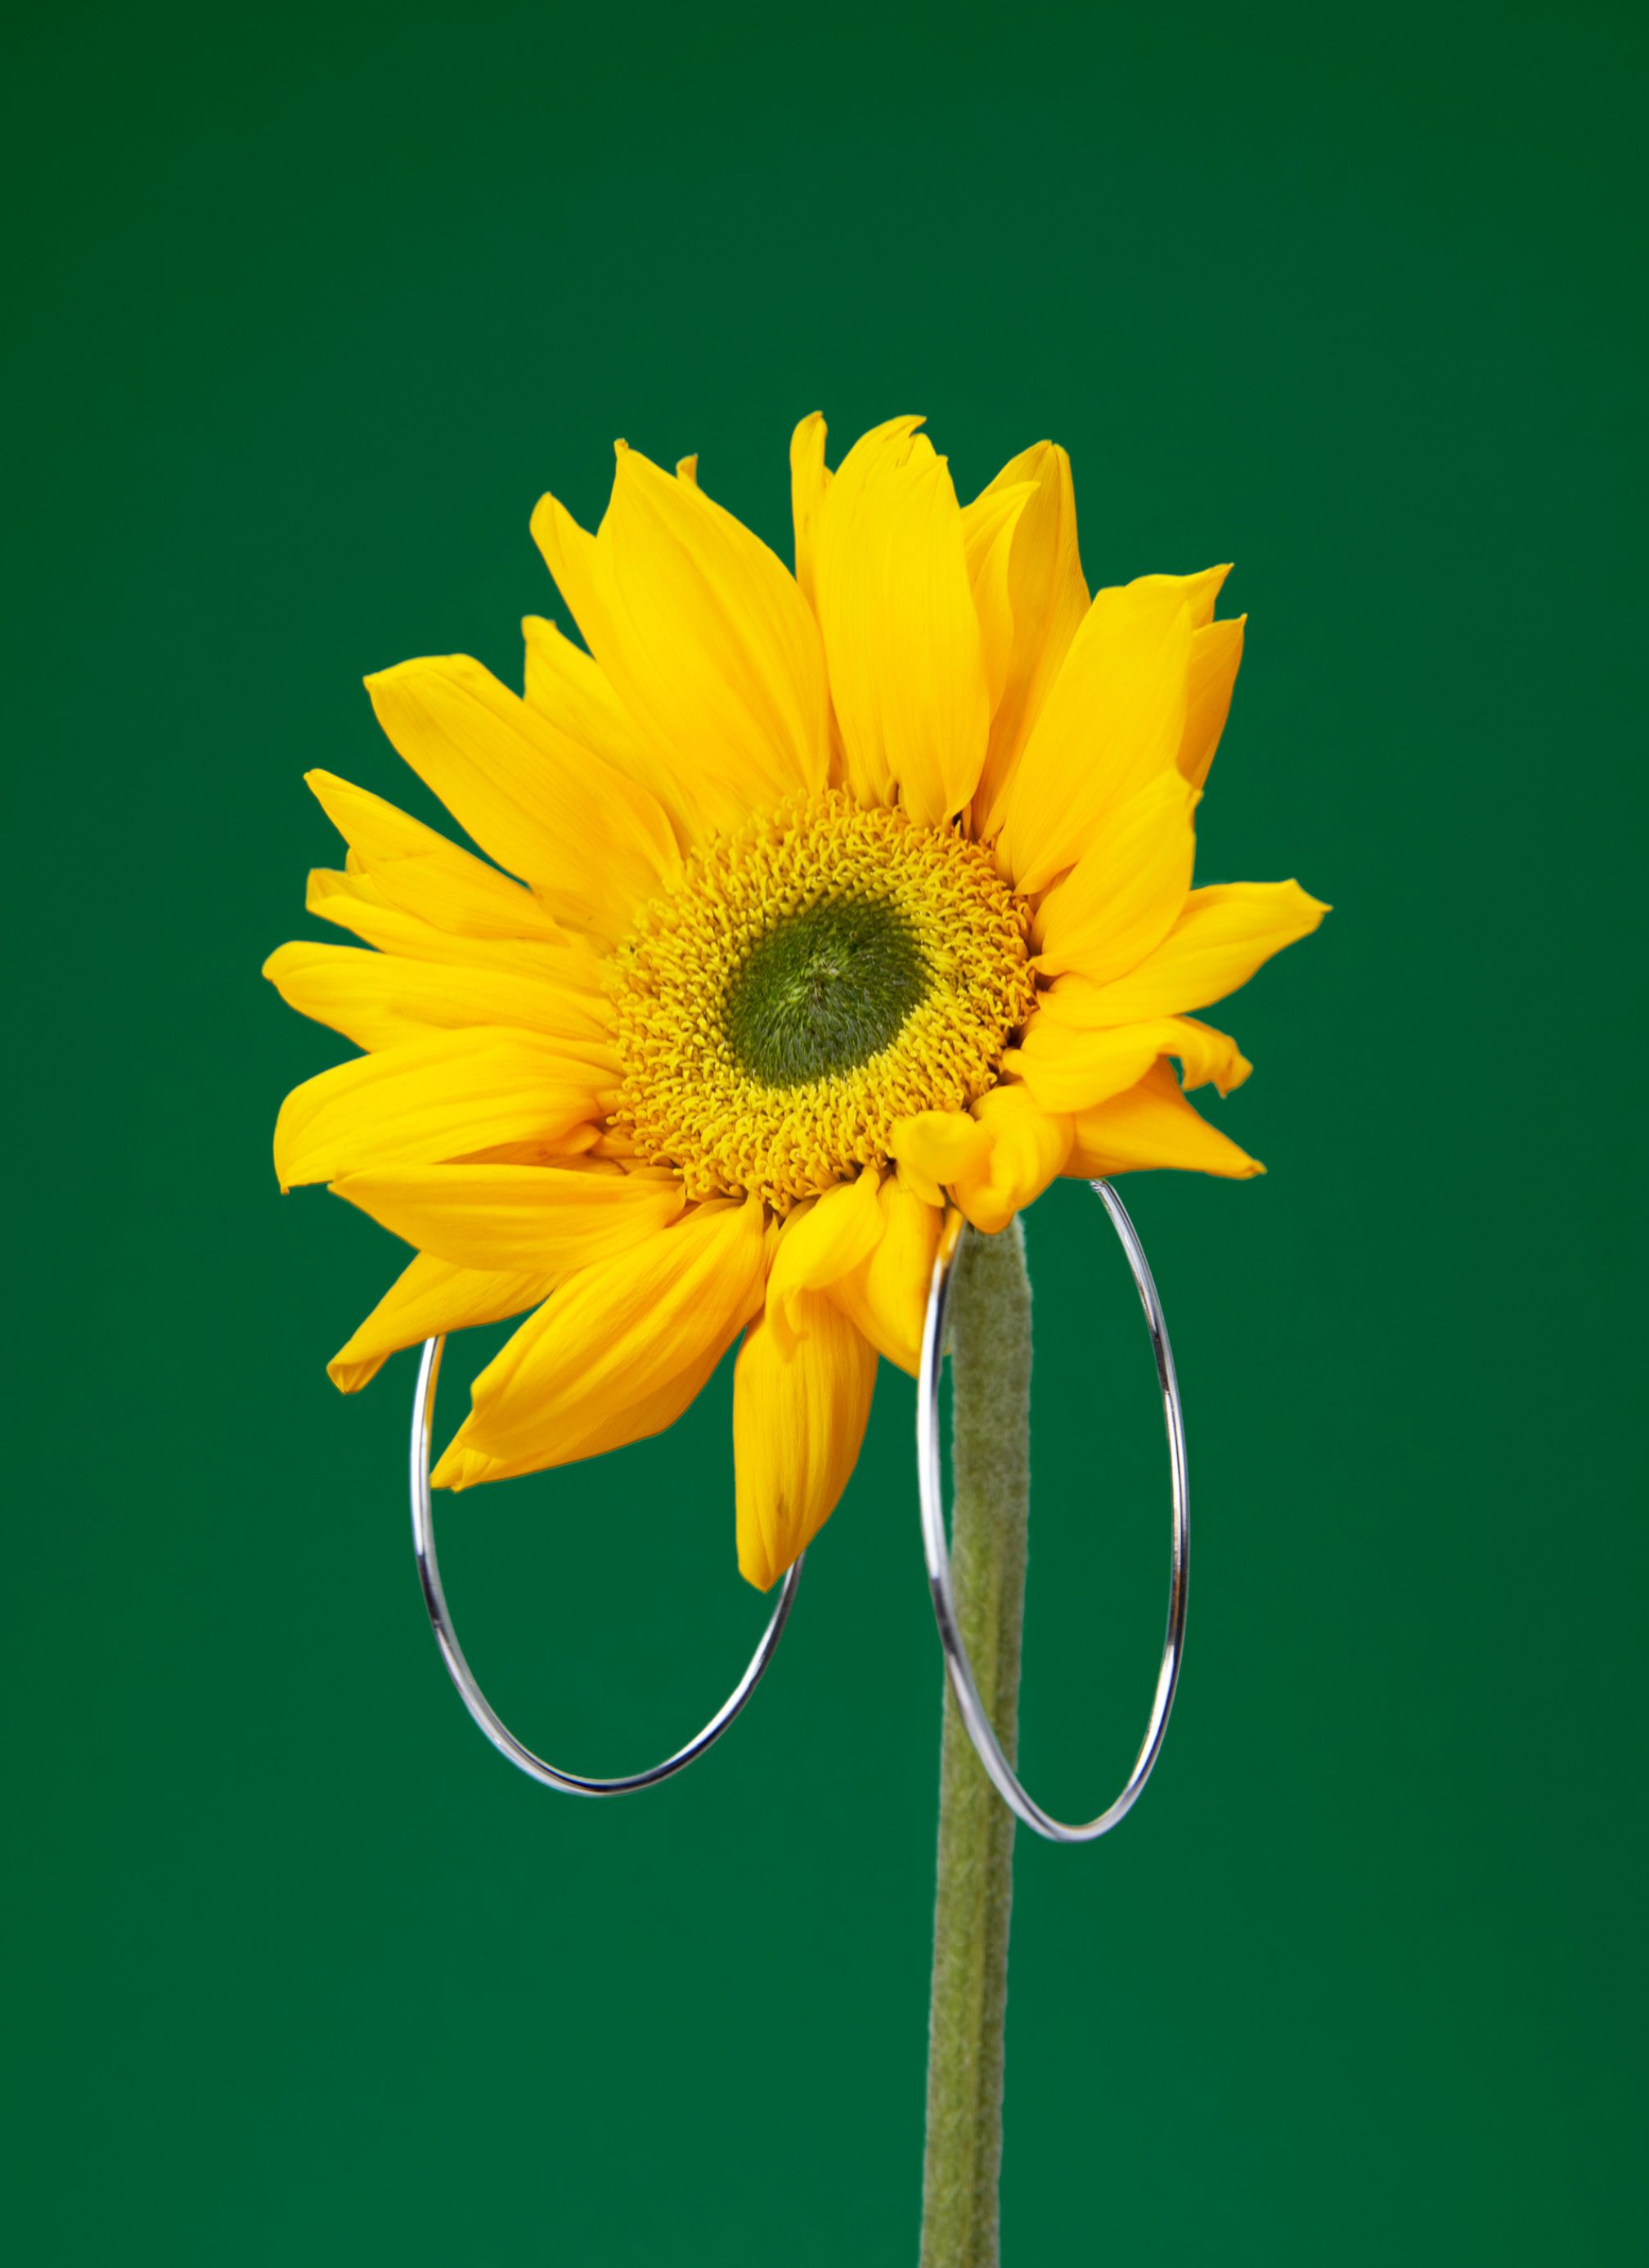 A sunflower wearing metal hoop earrings.